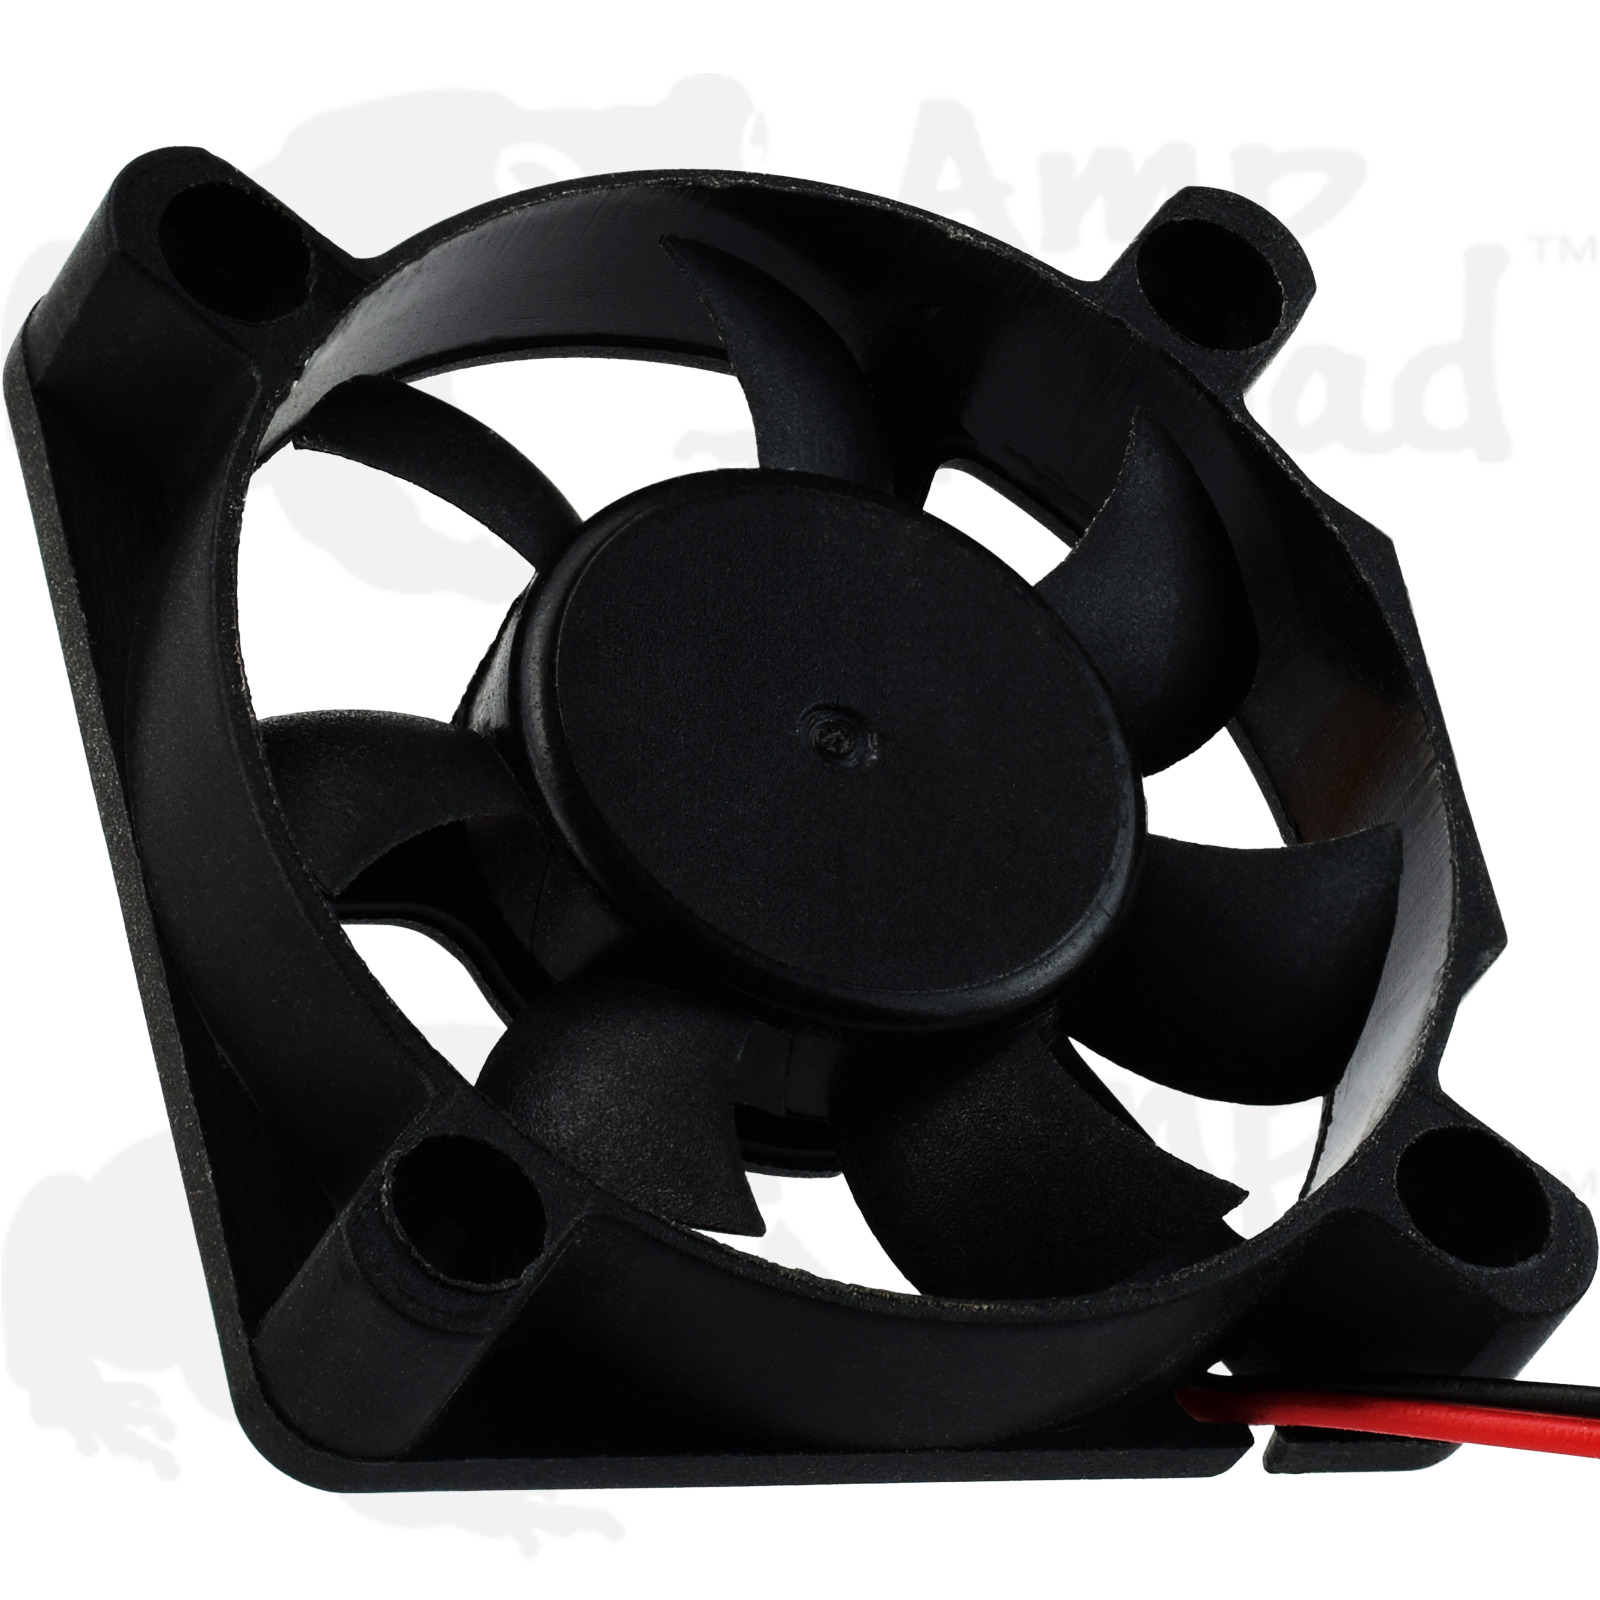 12V DC 5010 Cooling Fan 5cm for DIY, Arduio, 3D Printer, Computer parts, Pi, TTL